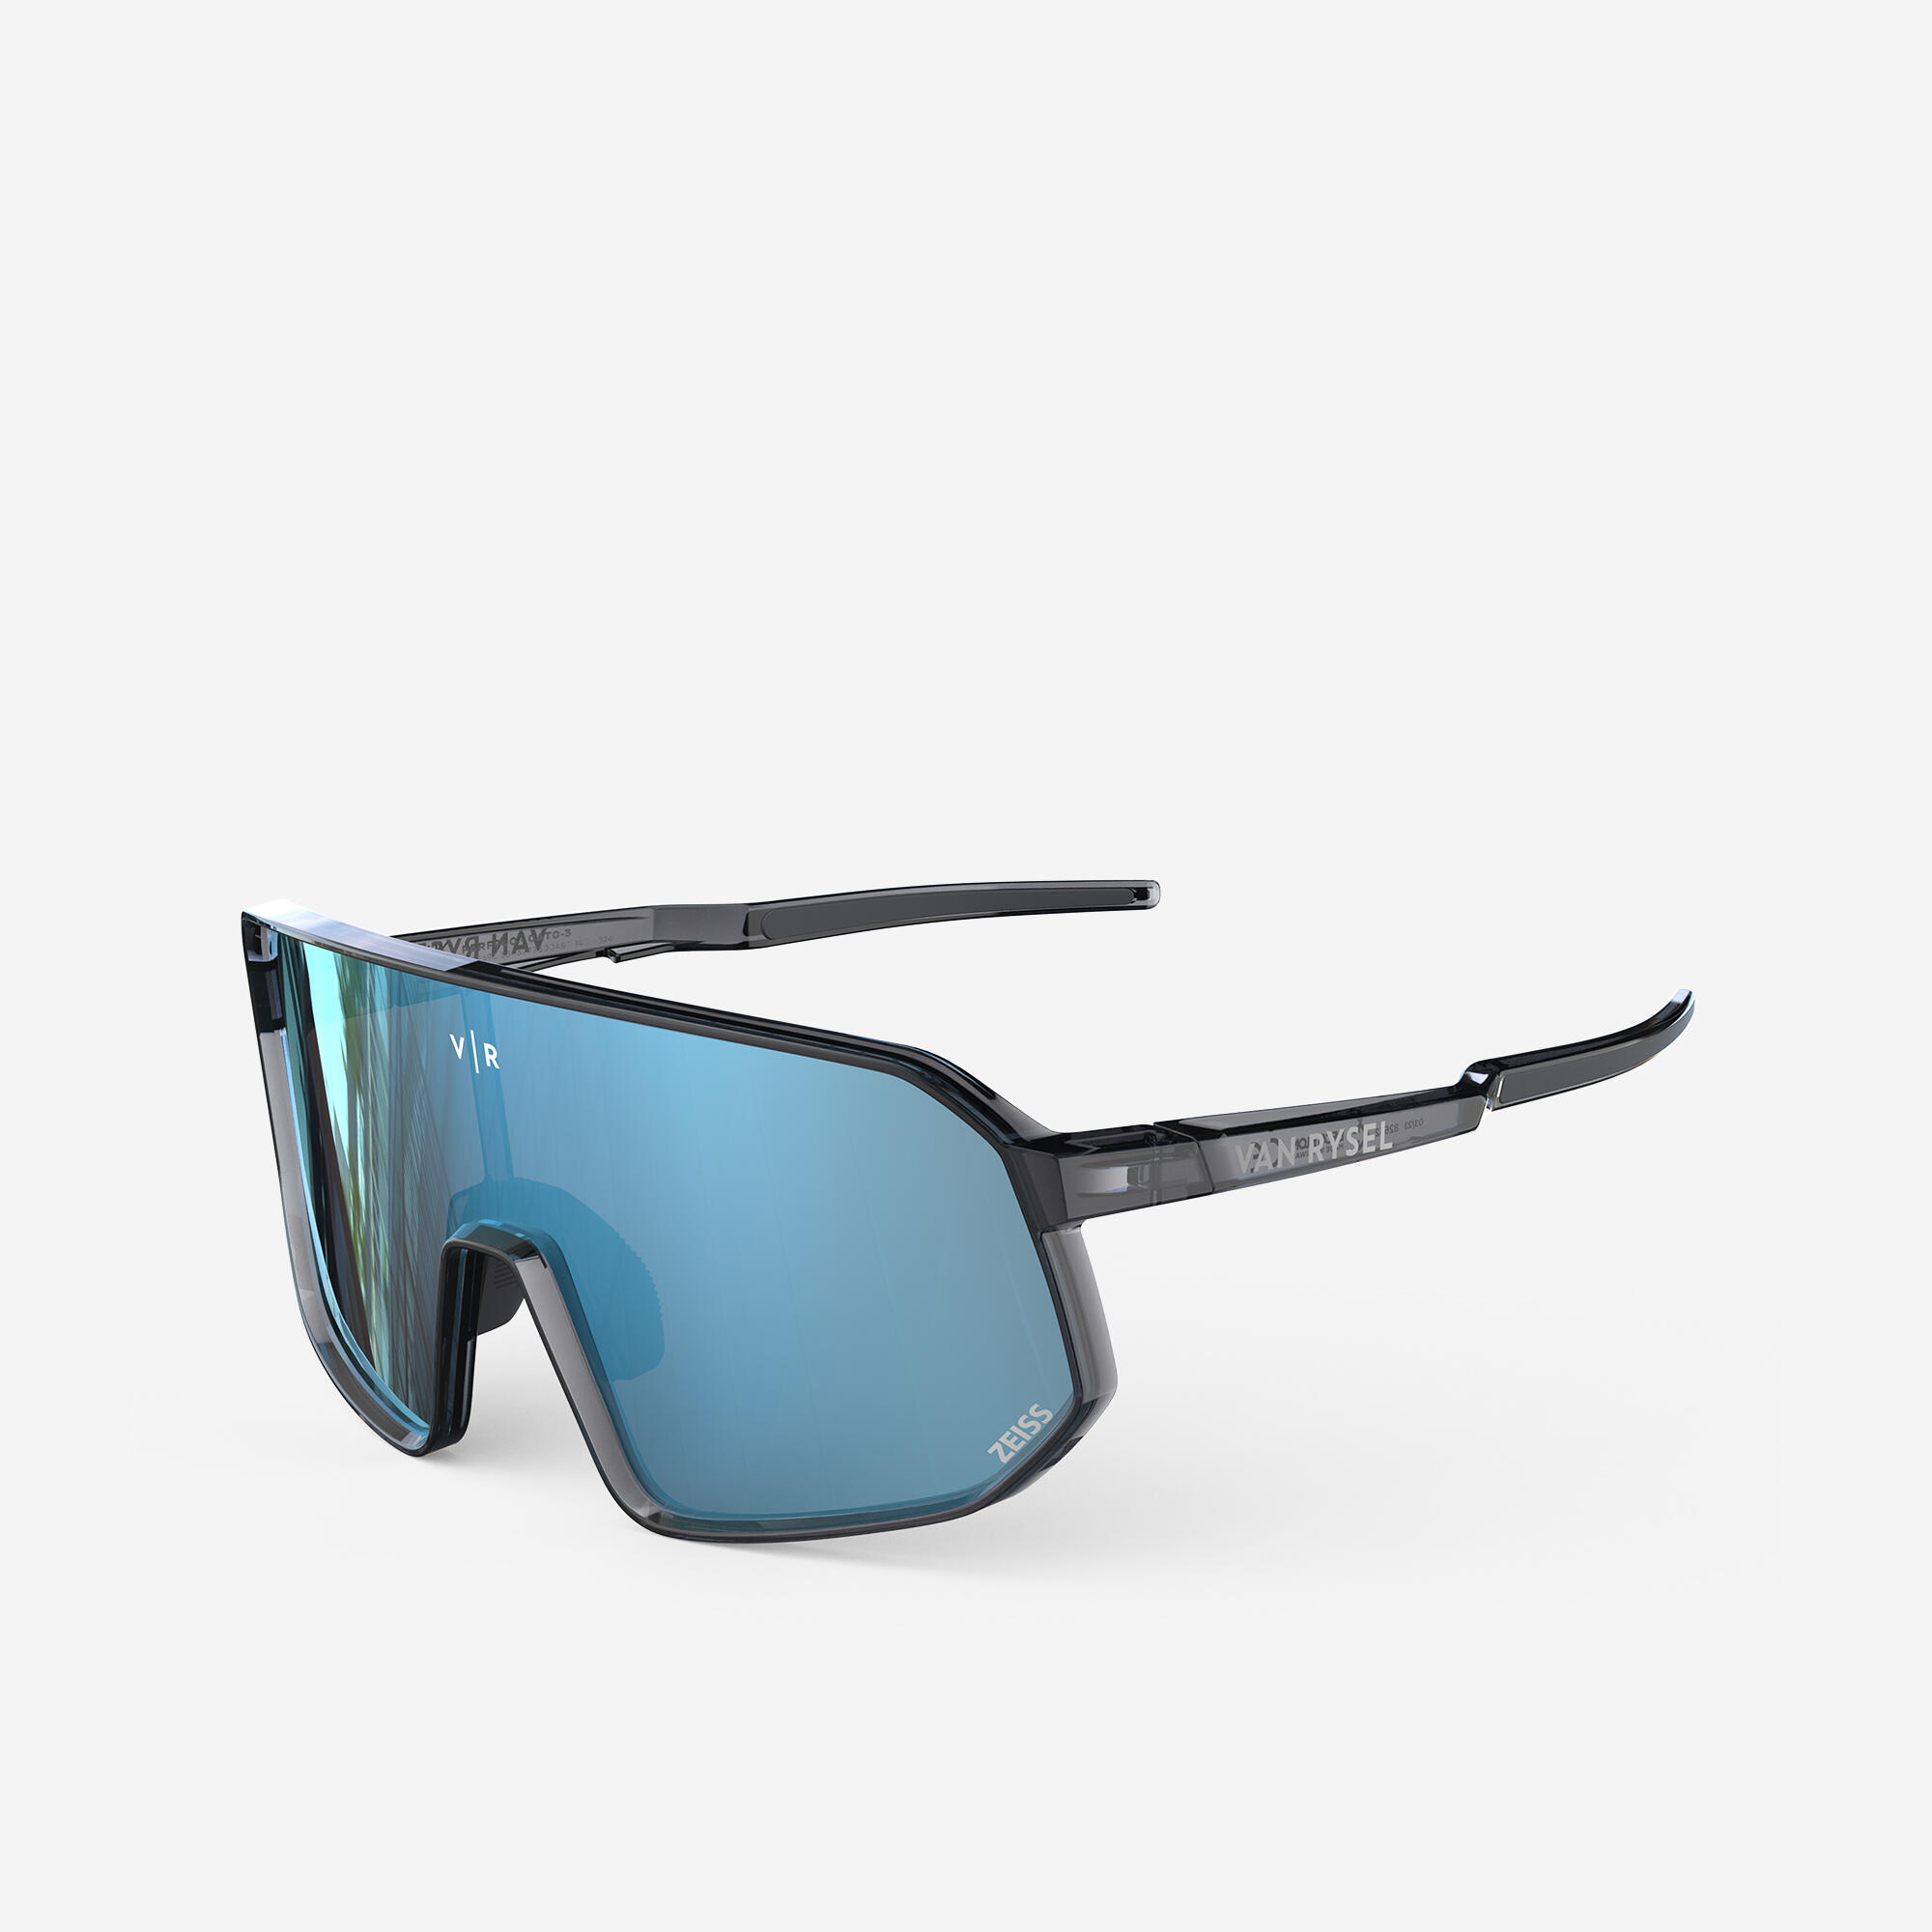 VAN RYSEL Sunglasses RoadR 900 Perf Light Pack - Grey / Translucent